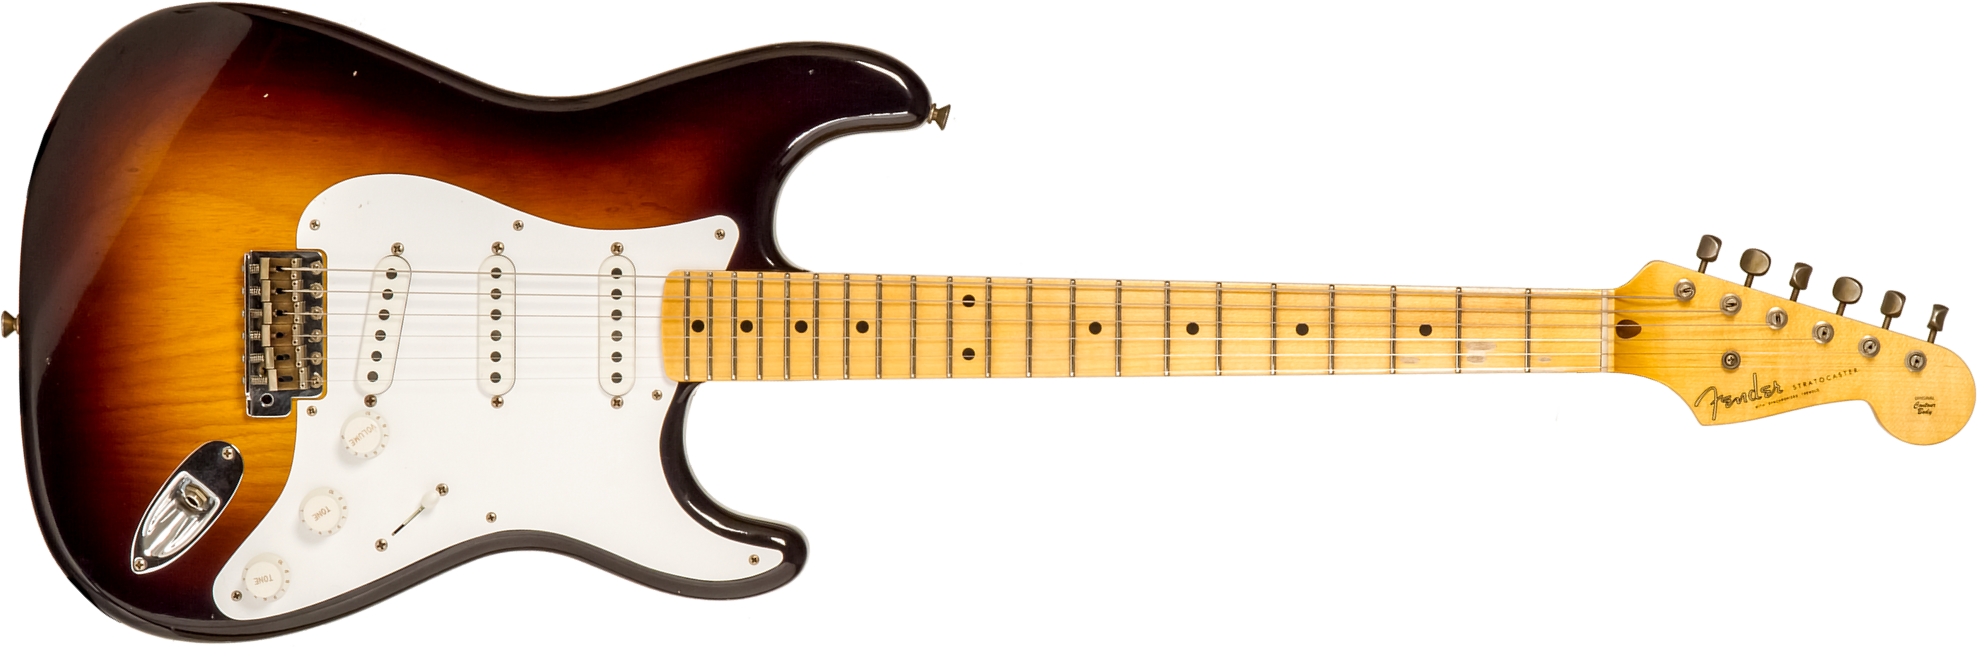 Fender Custom Shop Strat 1954 70th Anniv. 3s Trem Mn #xn4193 - Journeyman Relic Wide-fade 2-color Sunburst - Str shape electric guitar - Main picture